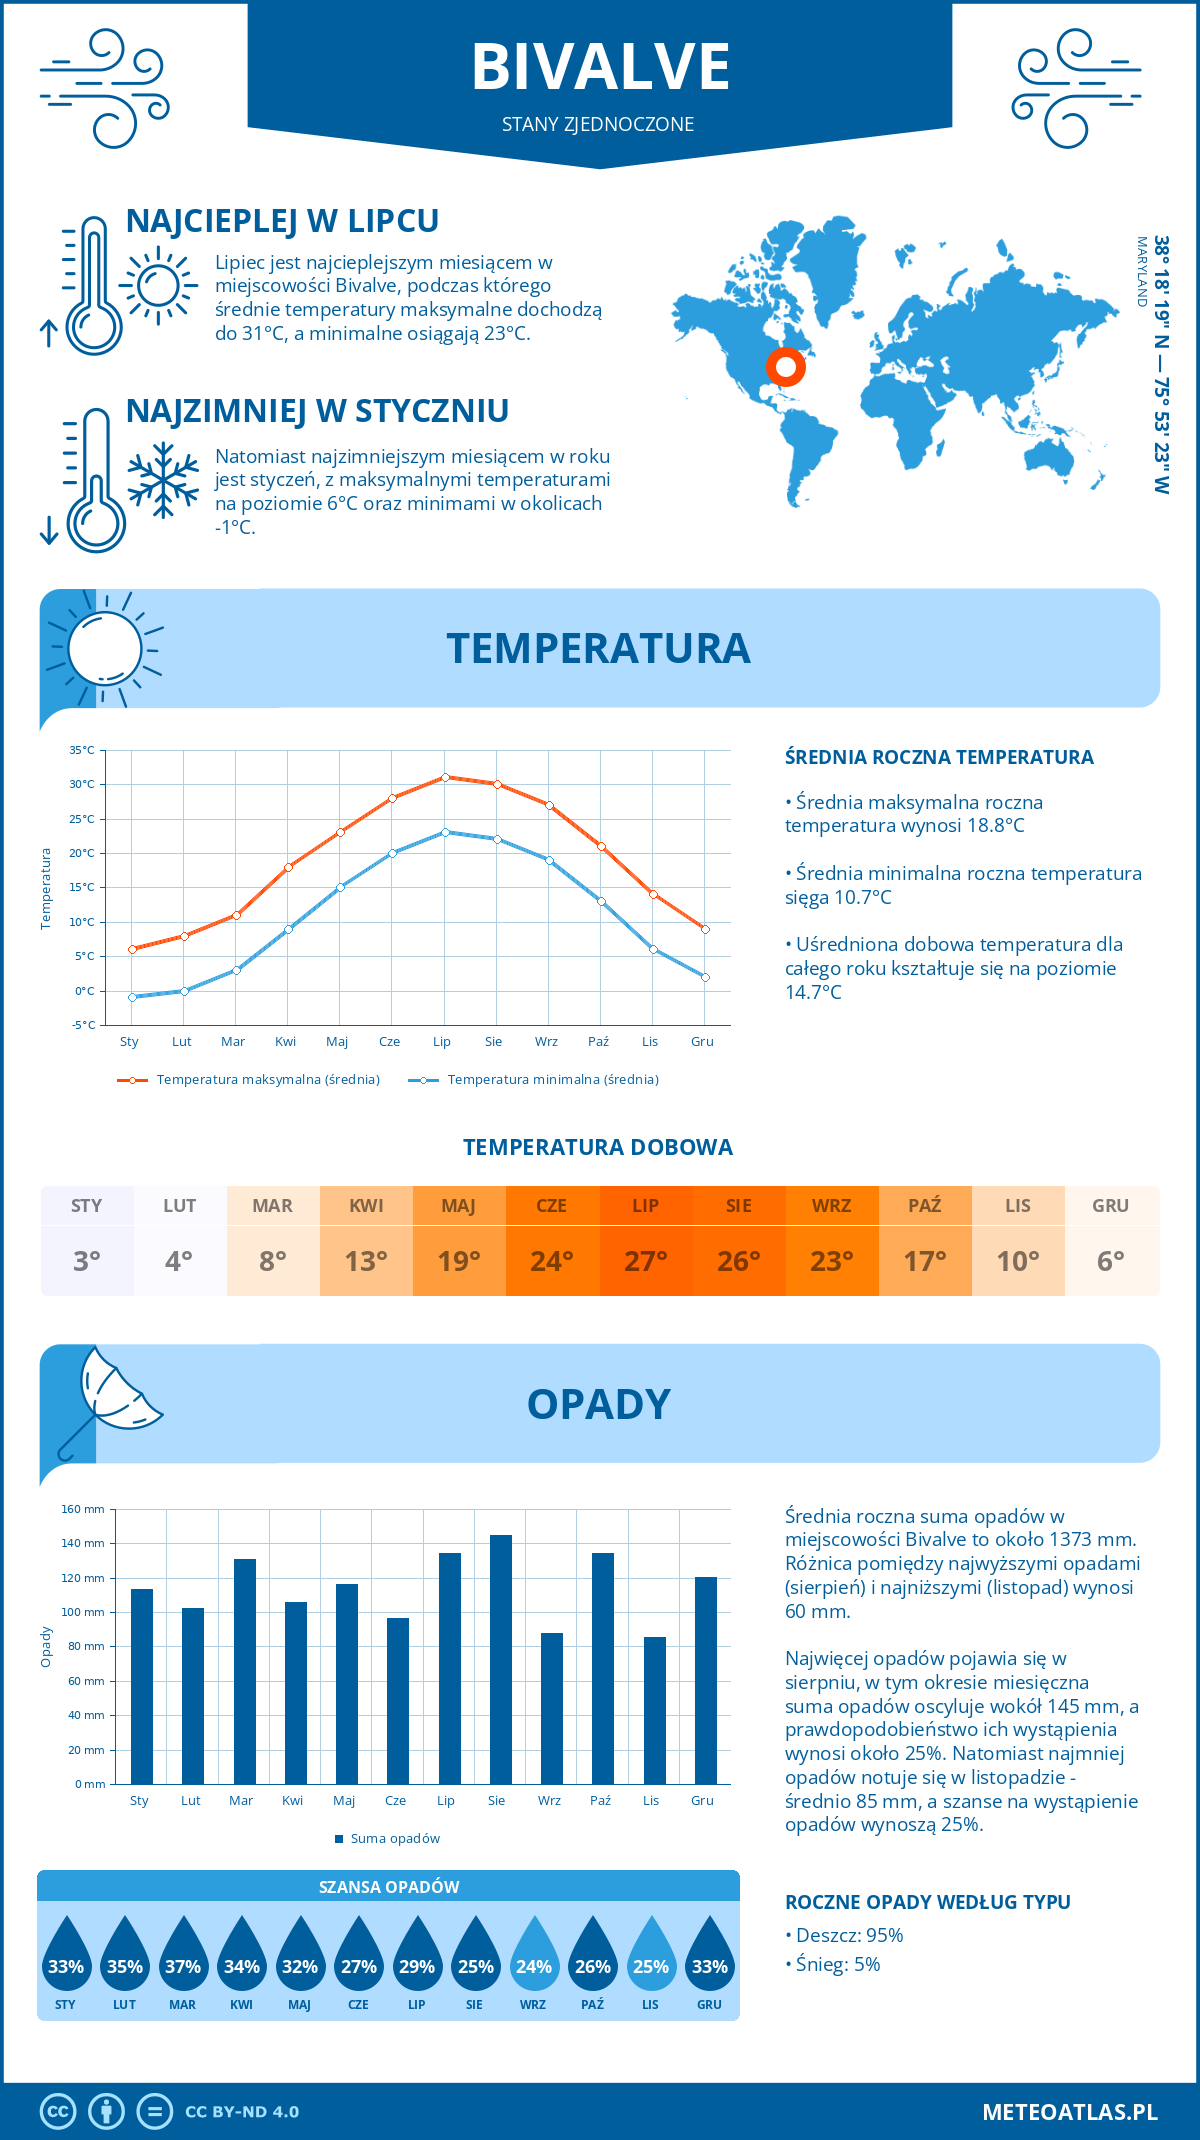 Pogoda Bivalve (Stany Zjednoczone). Temperatura oraz opady.